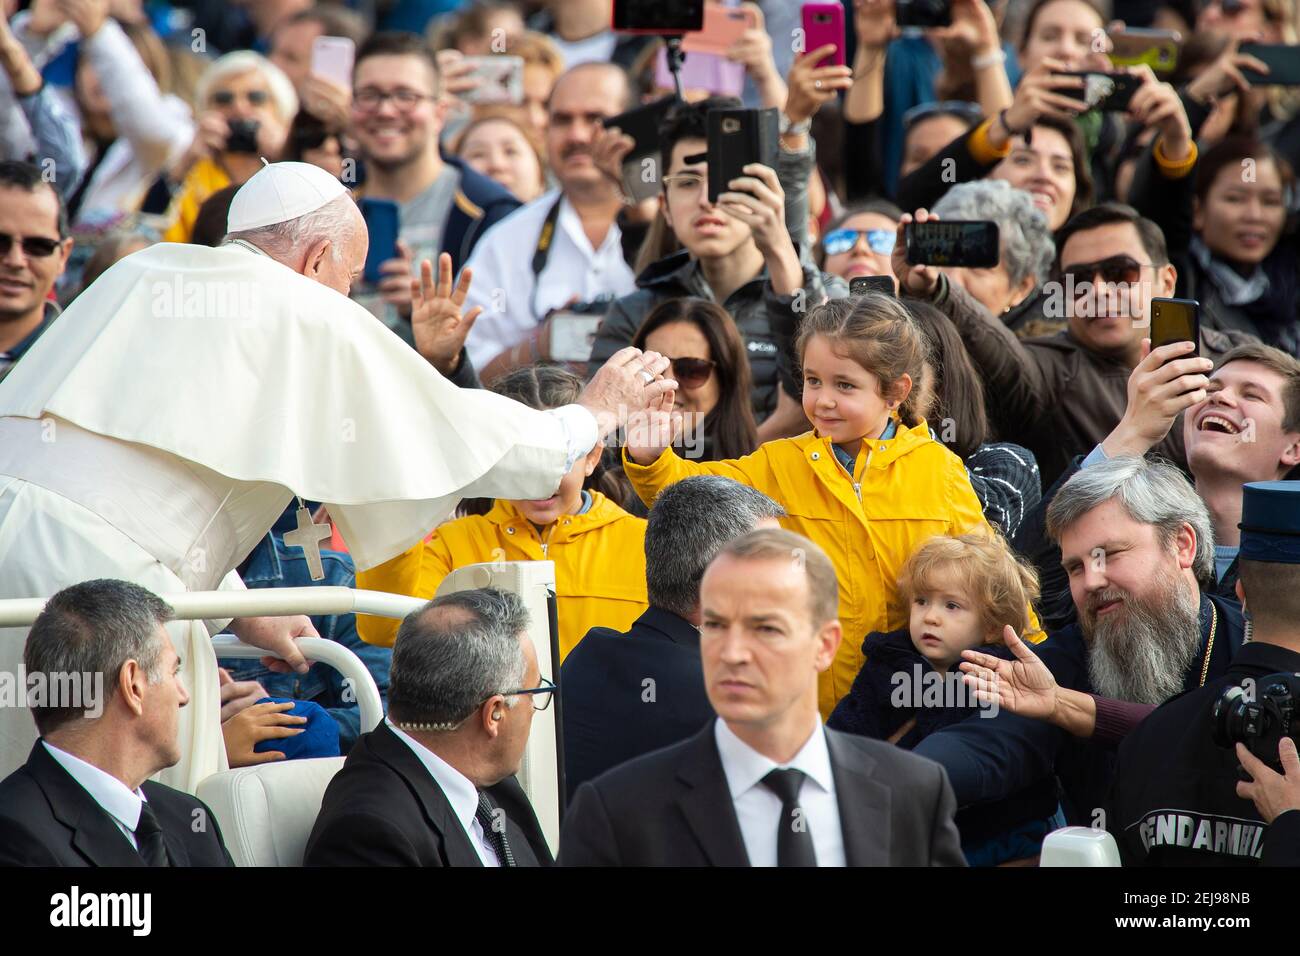 Udienza Generale di Papa francesco, 06 novembre 2019 Foto Stock